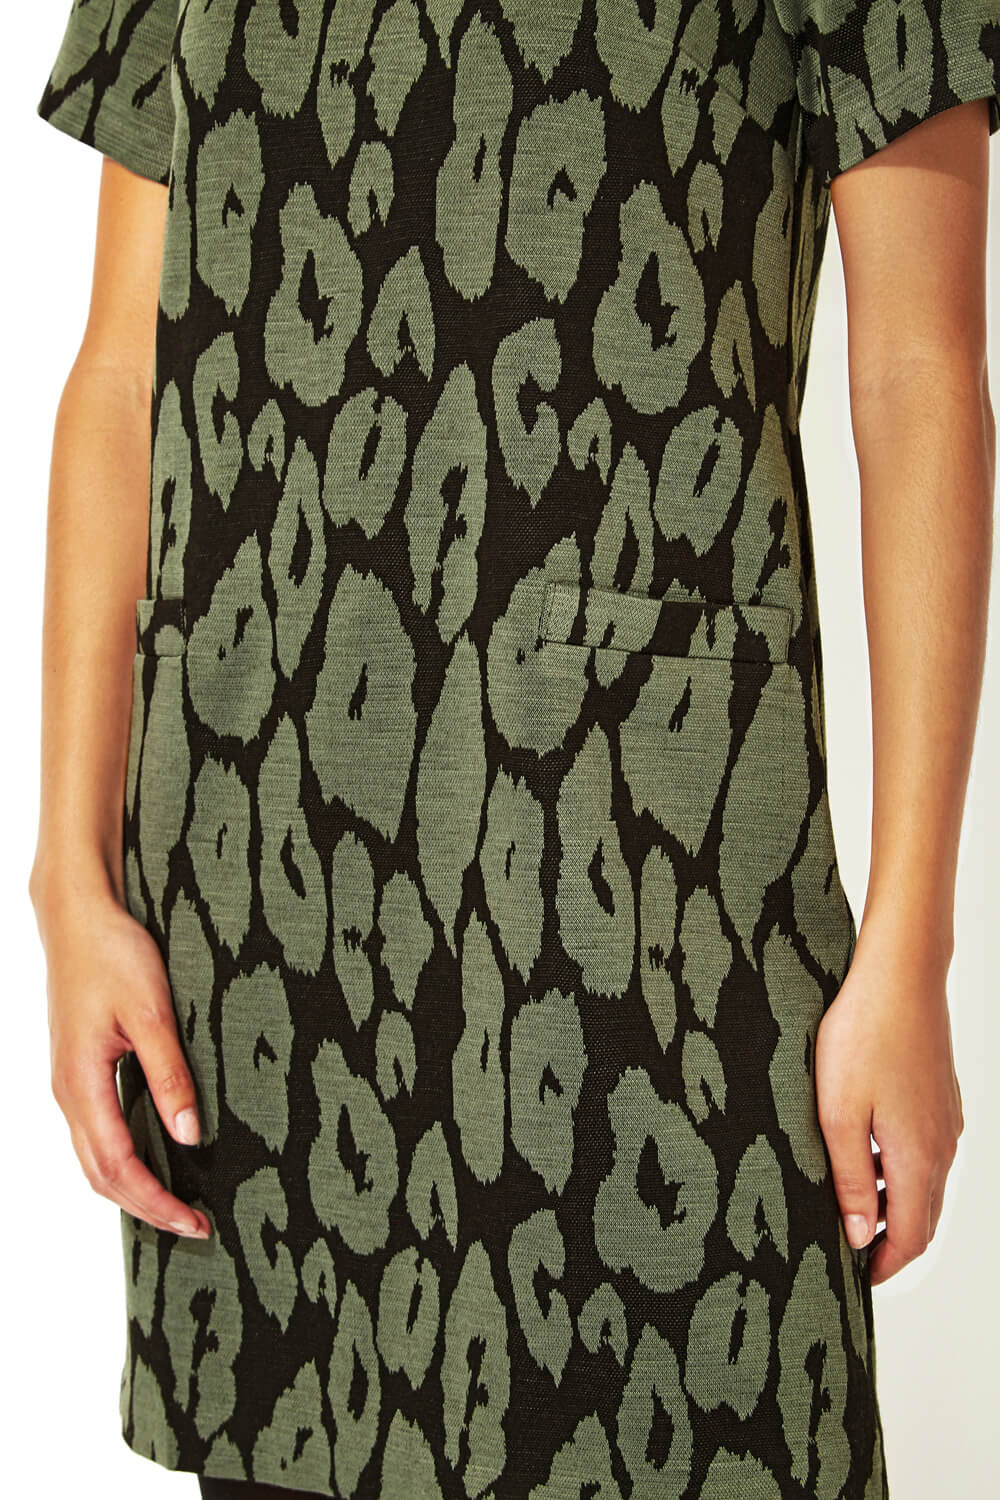 KHAKI Animal Leopard Print Shift Dress, Image 4 of 5